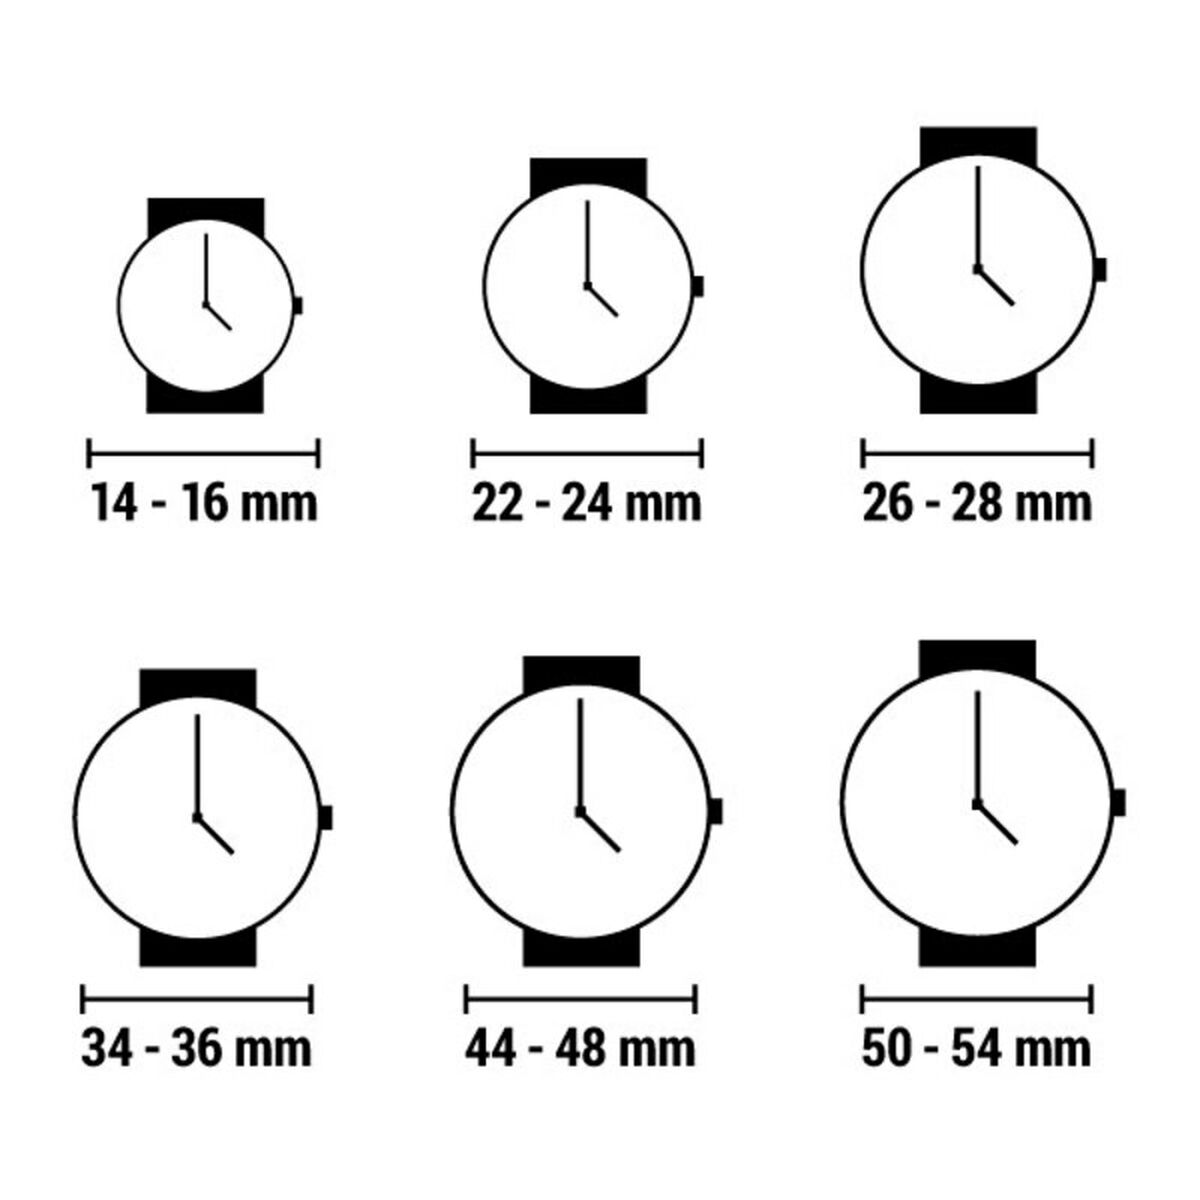 Horloge Dames Komono KOM-W2455 (Ø 36 mm)